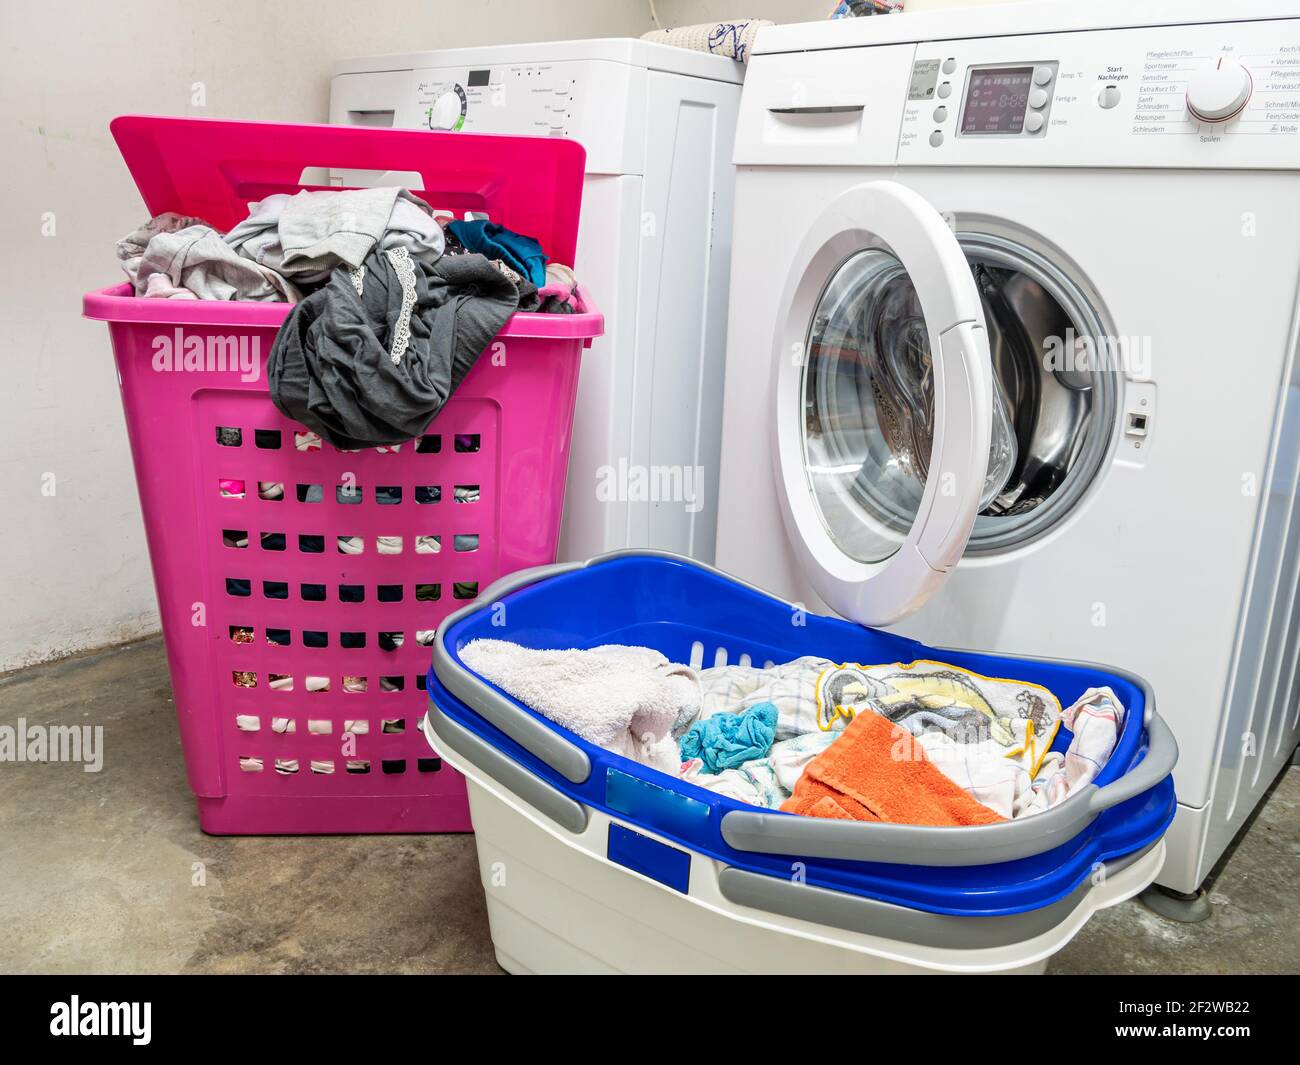 Washing machine and laundry basket at home Stock Photo